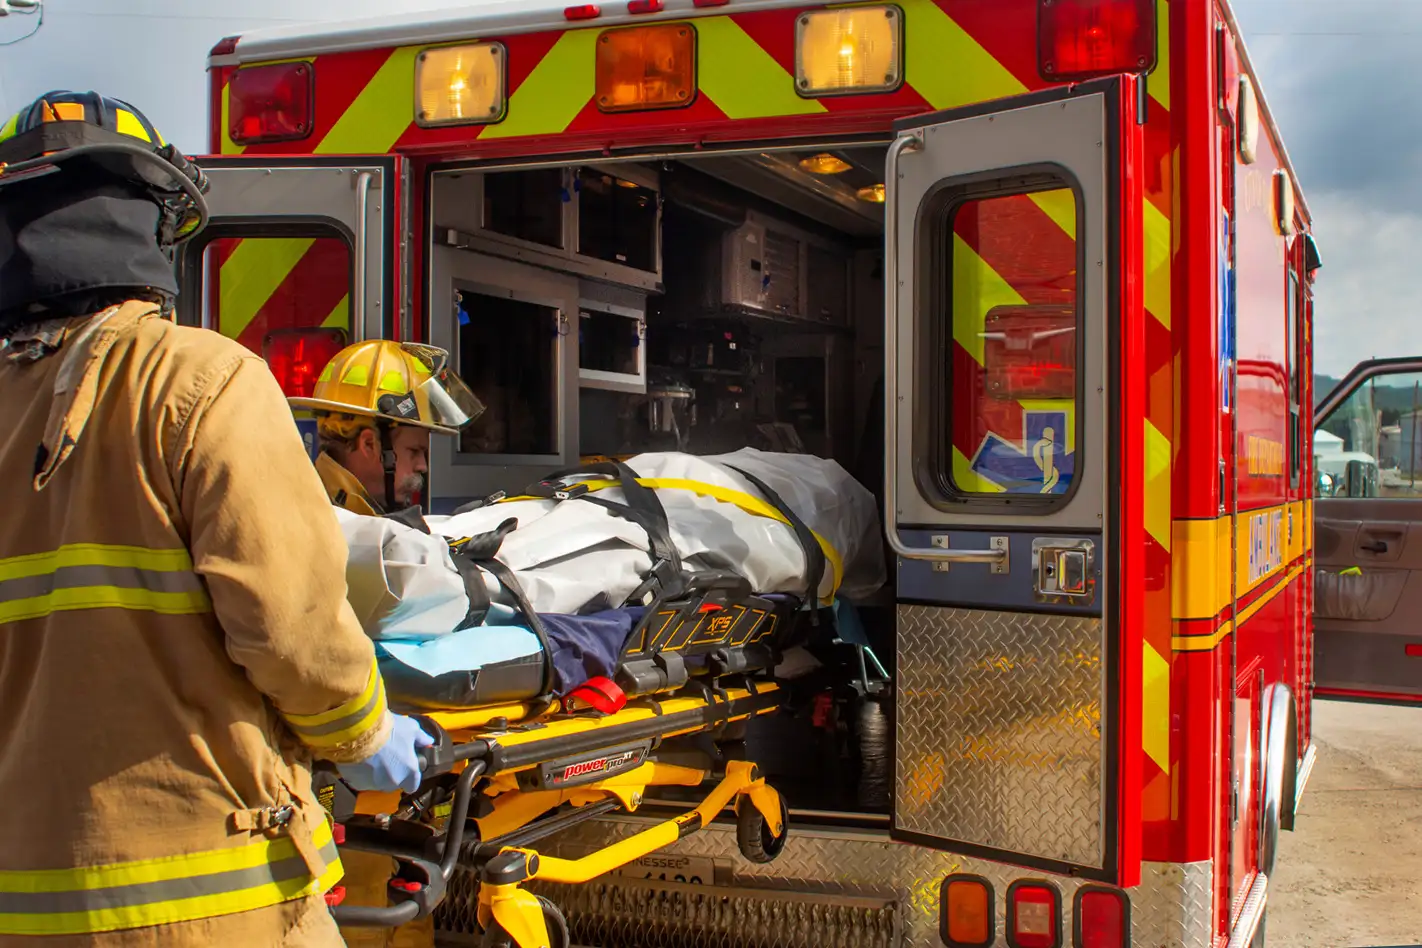 Firemen load a patient into an ambulance